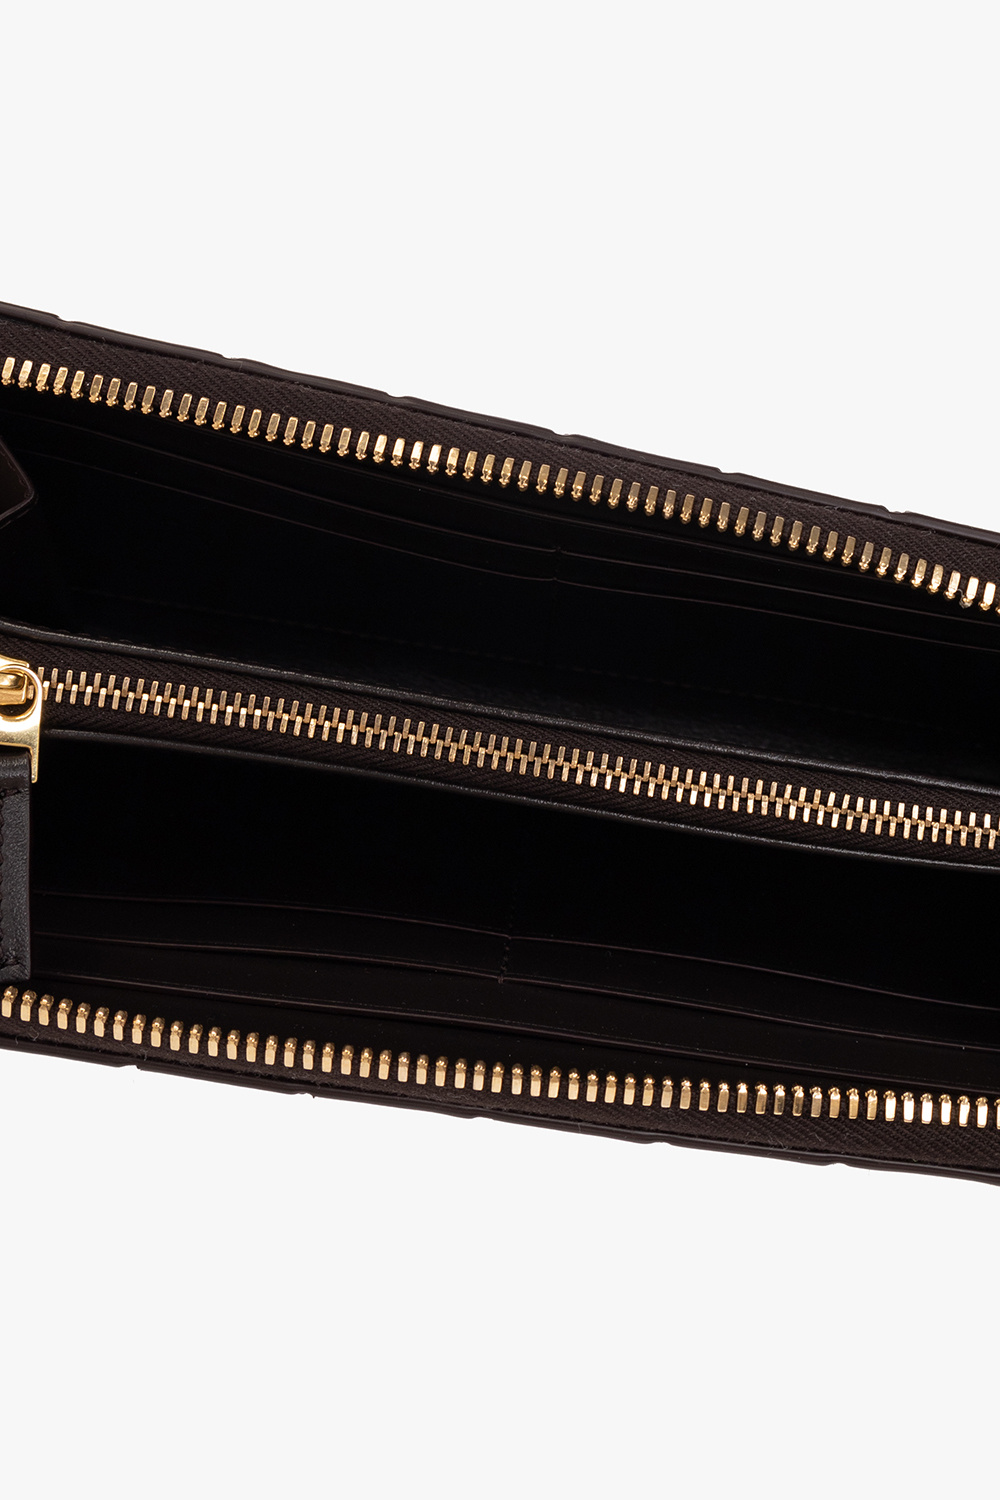 bottega dot Veneta Leather wallet with ‘Intrecciato’ weave